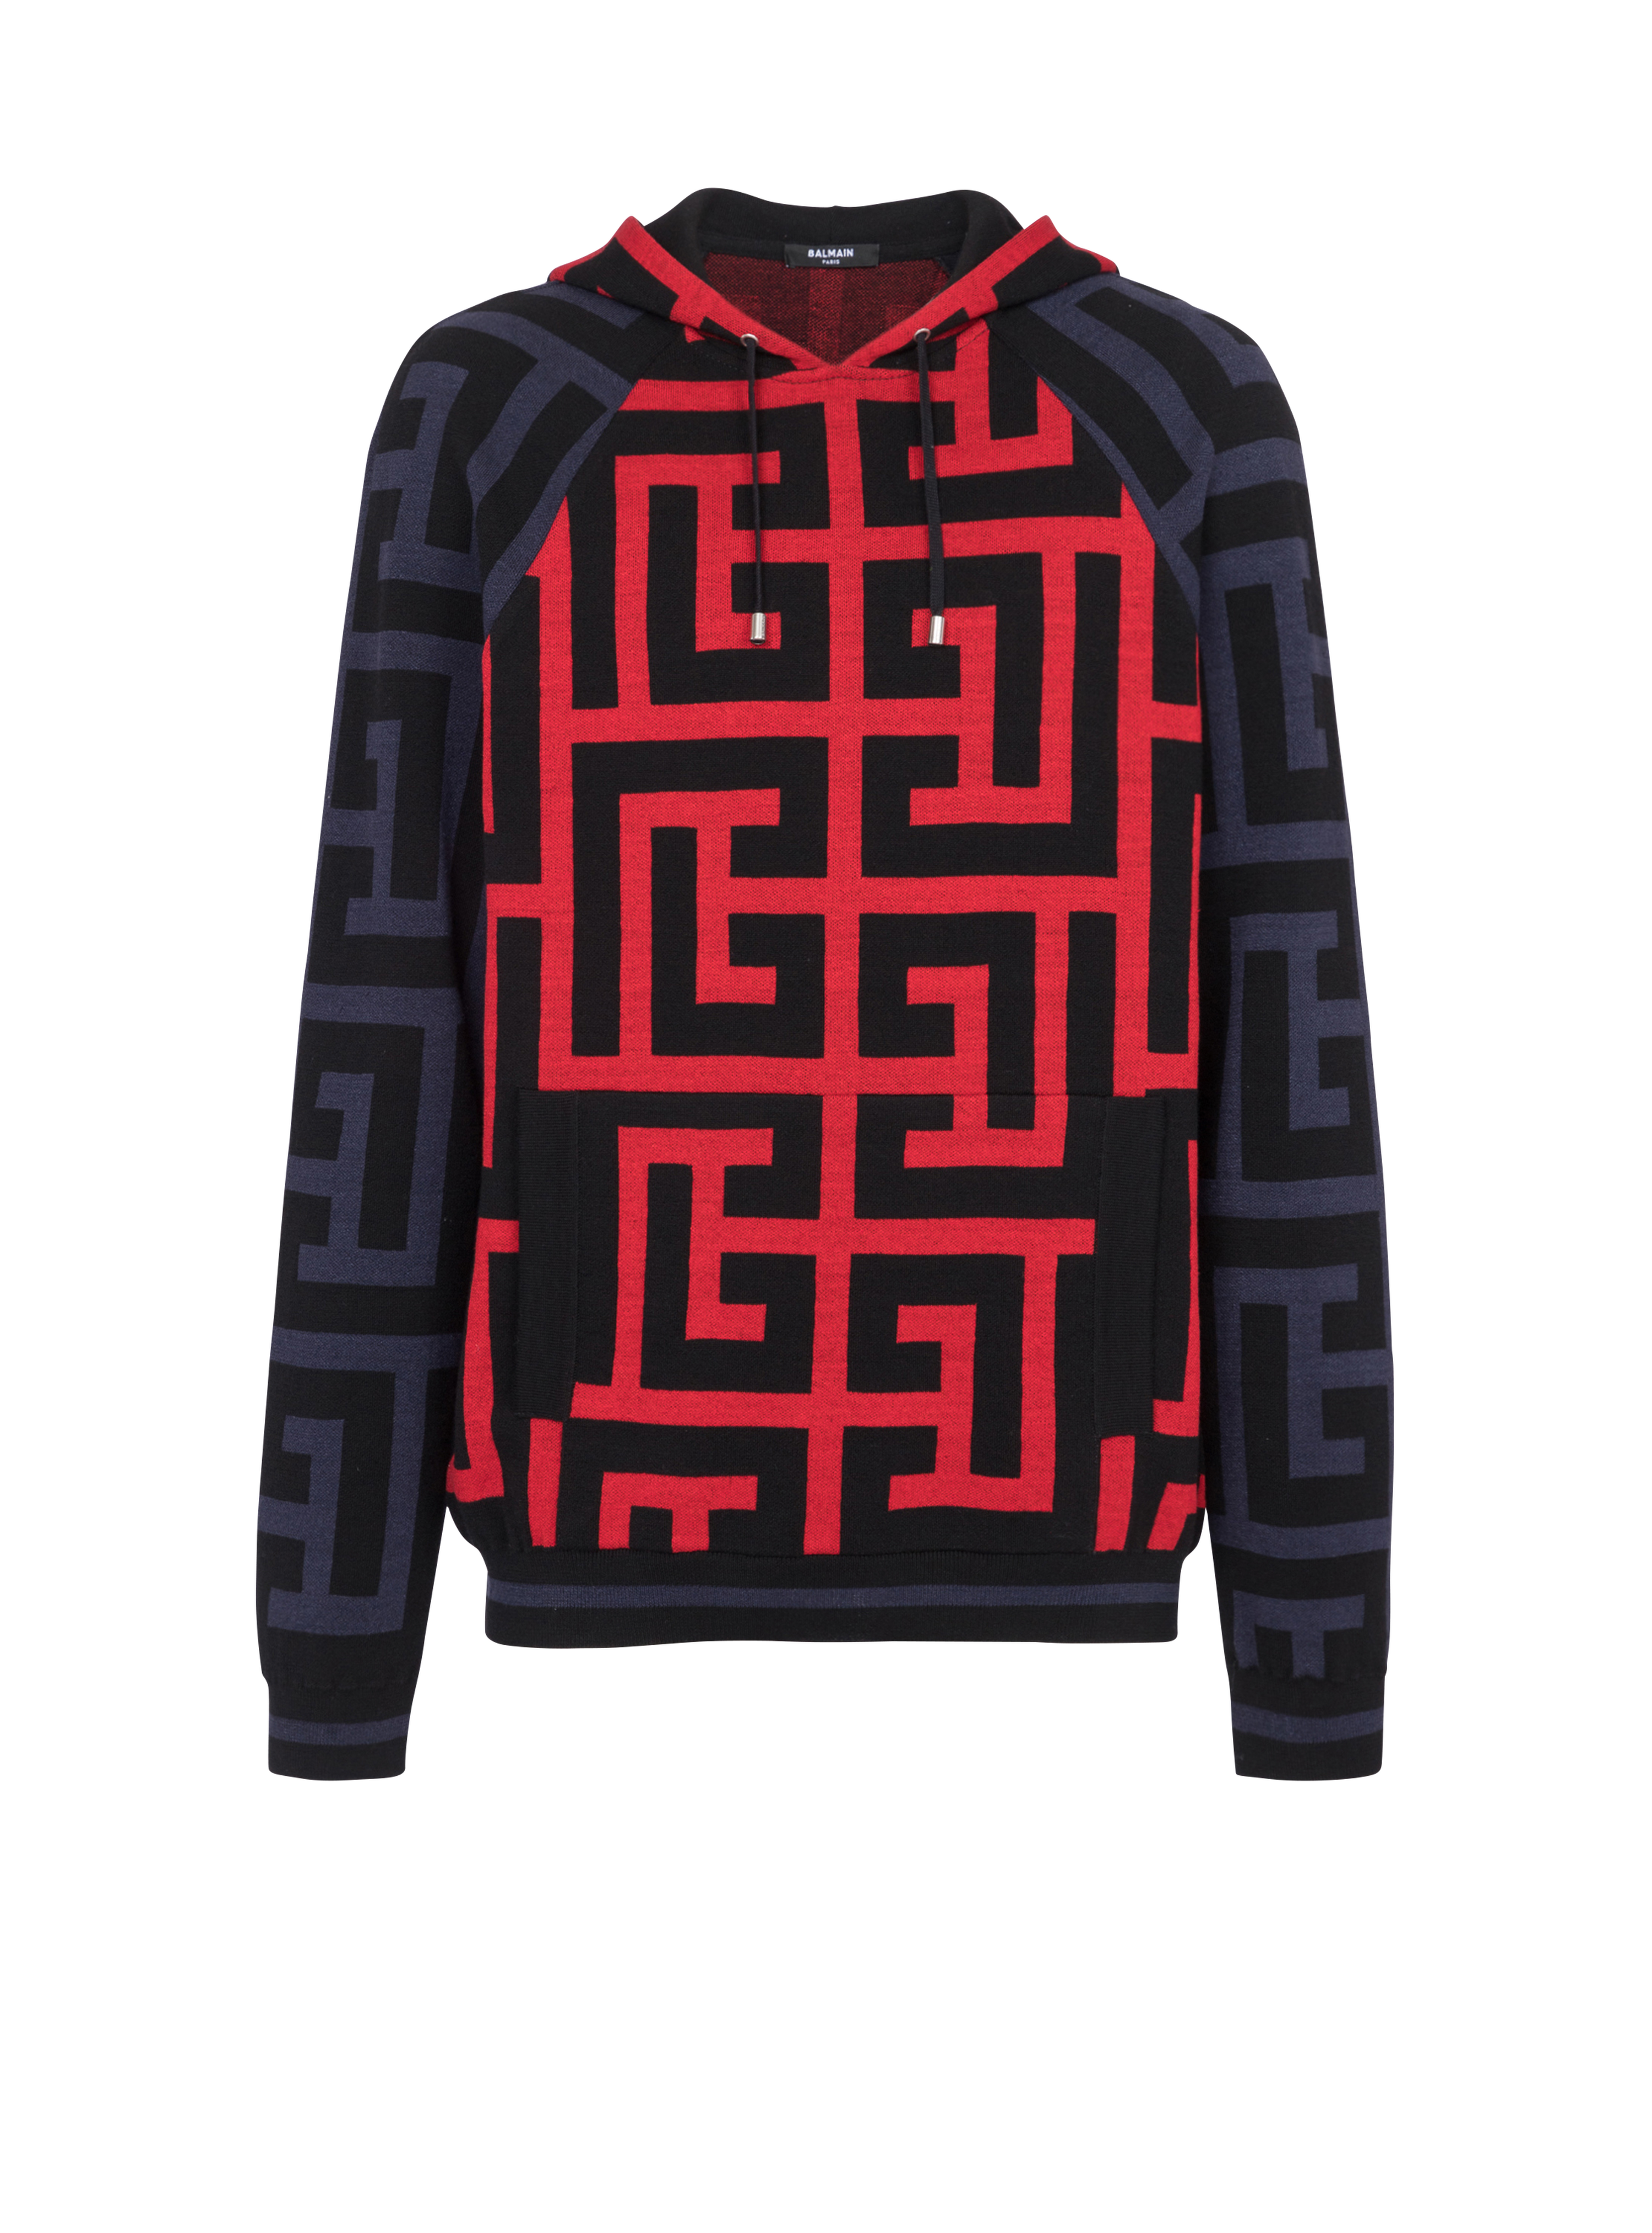 Hooded wool sweatshirt with maxi Balmain monogram print, red